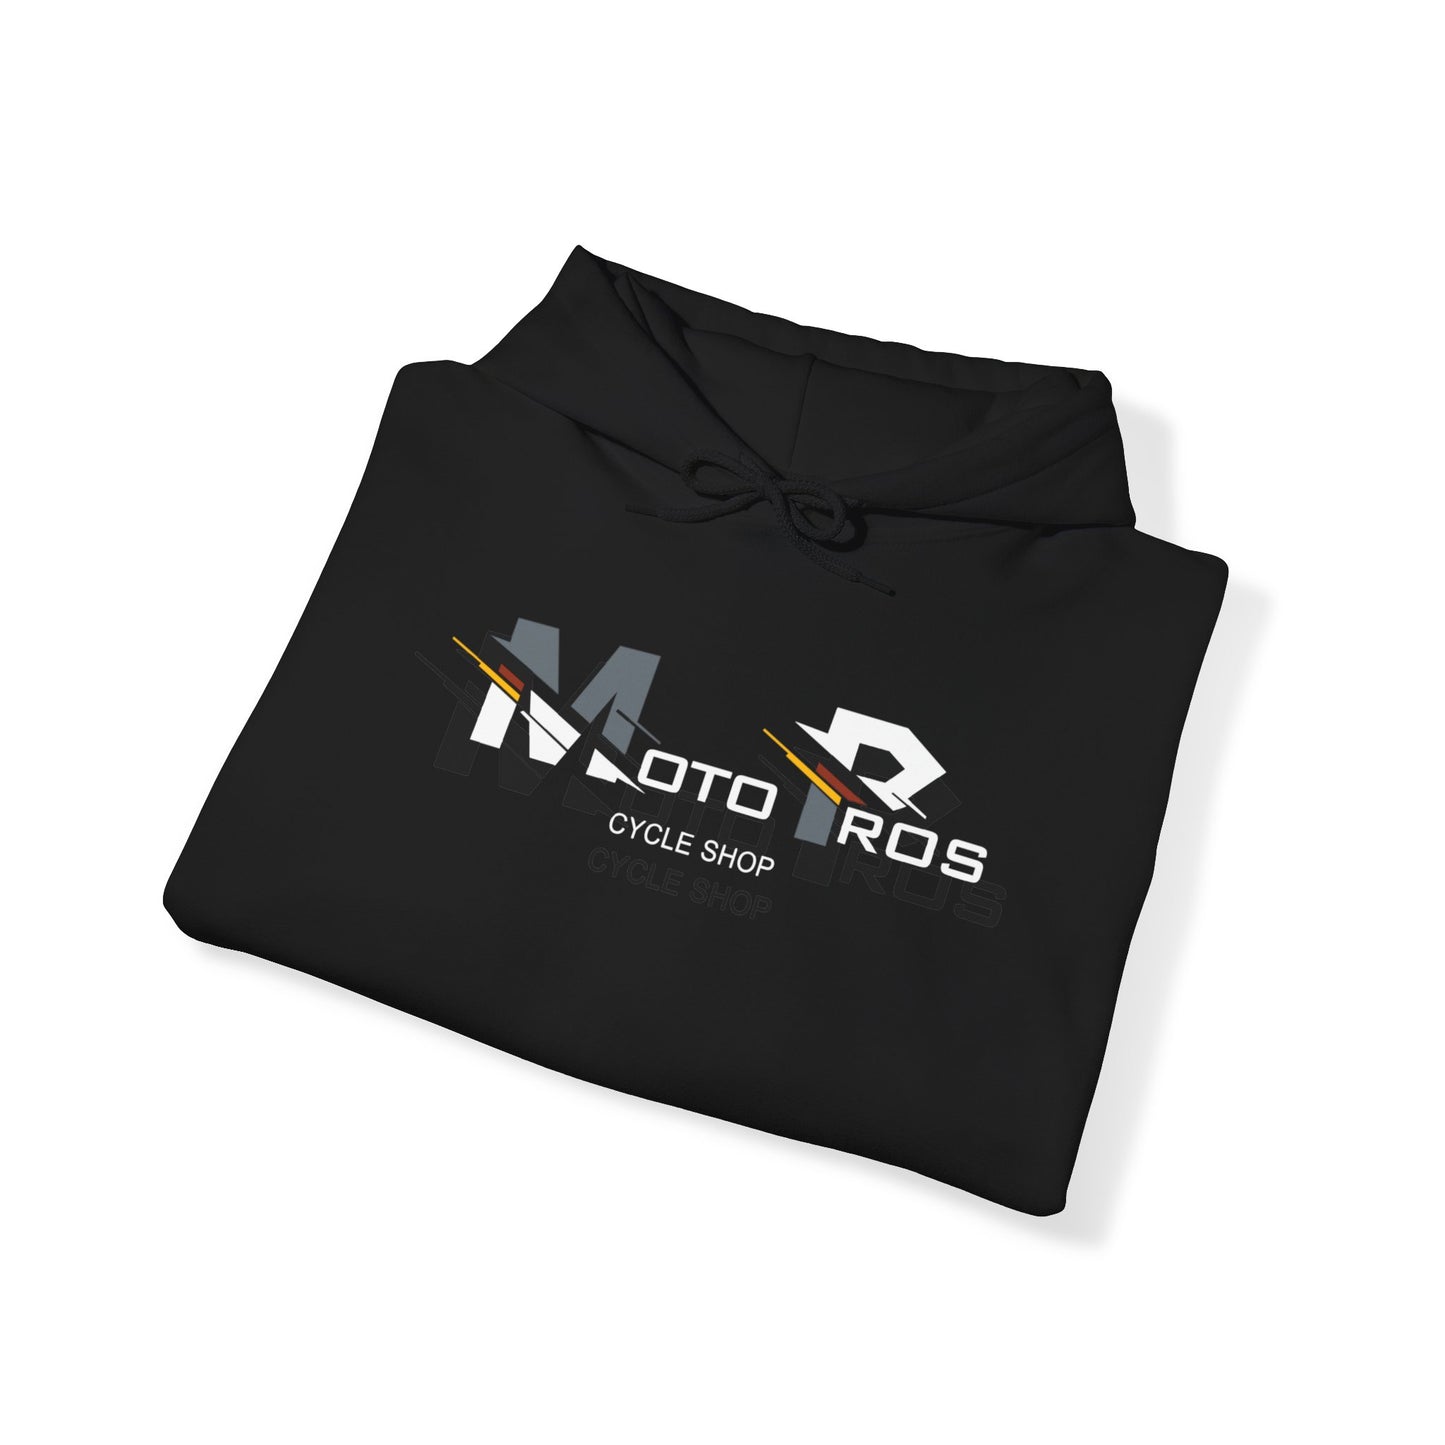 Moto Pros Cycle Shop Sweatshirt